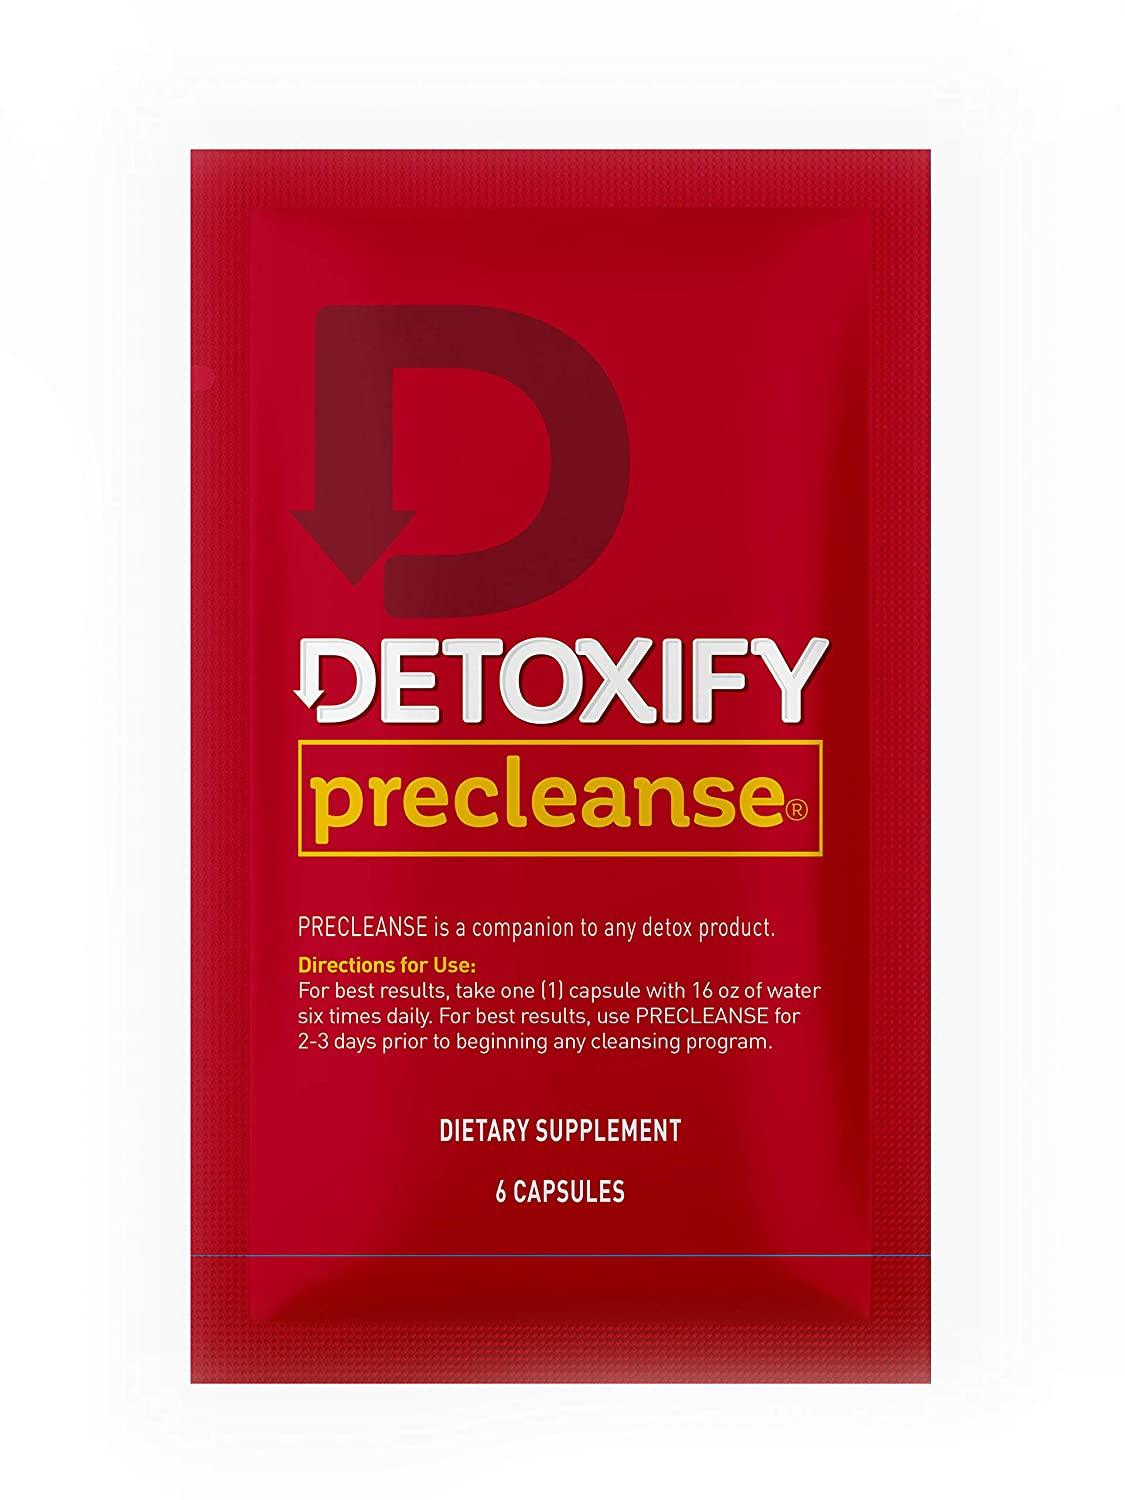 Detoxify - NutraStop